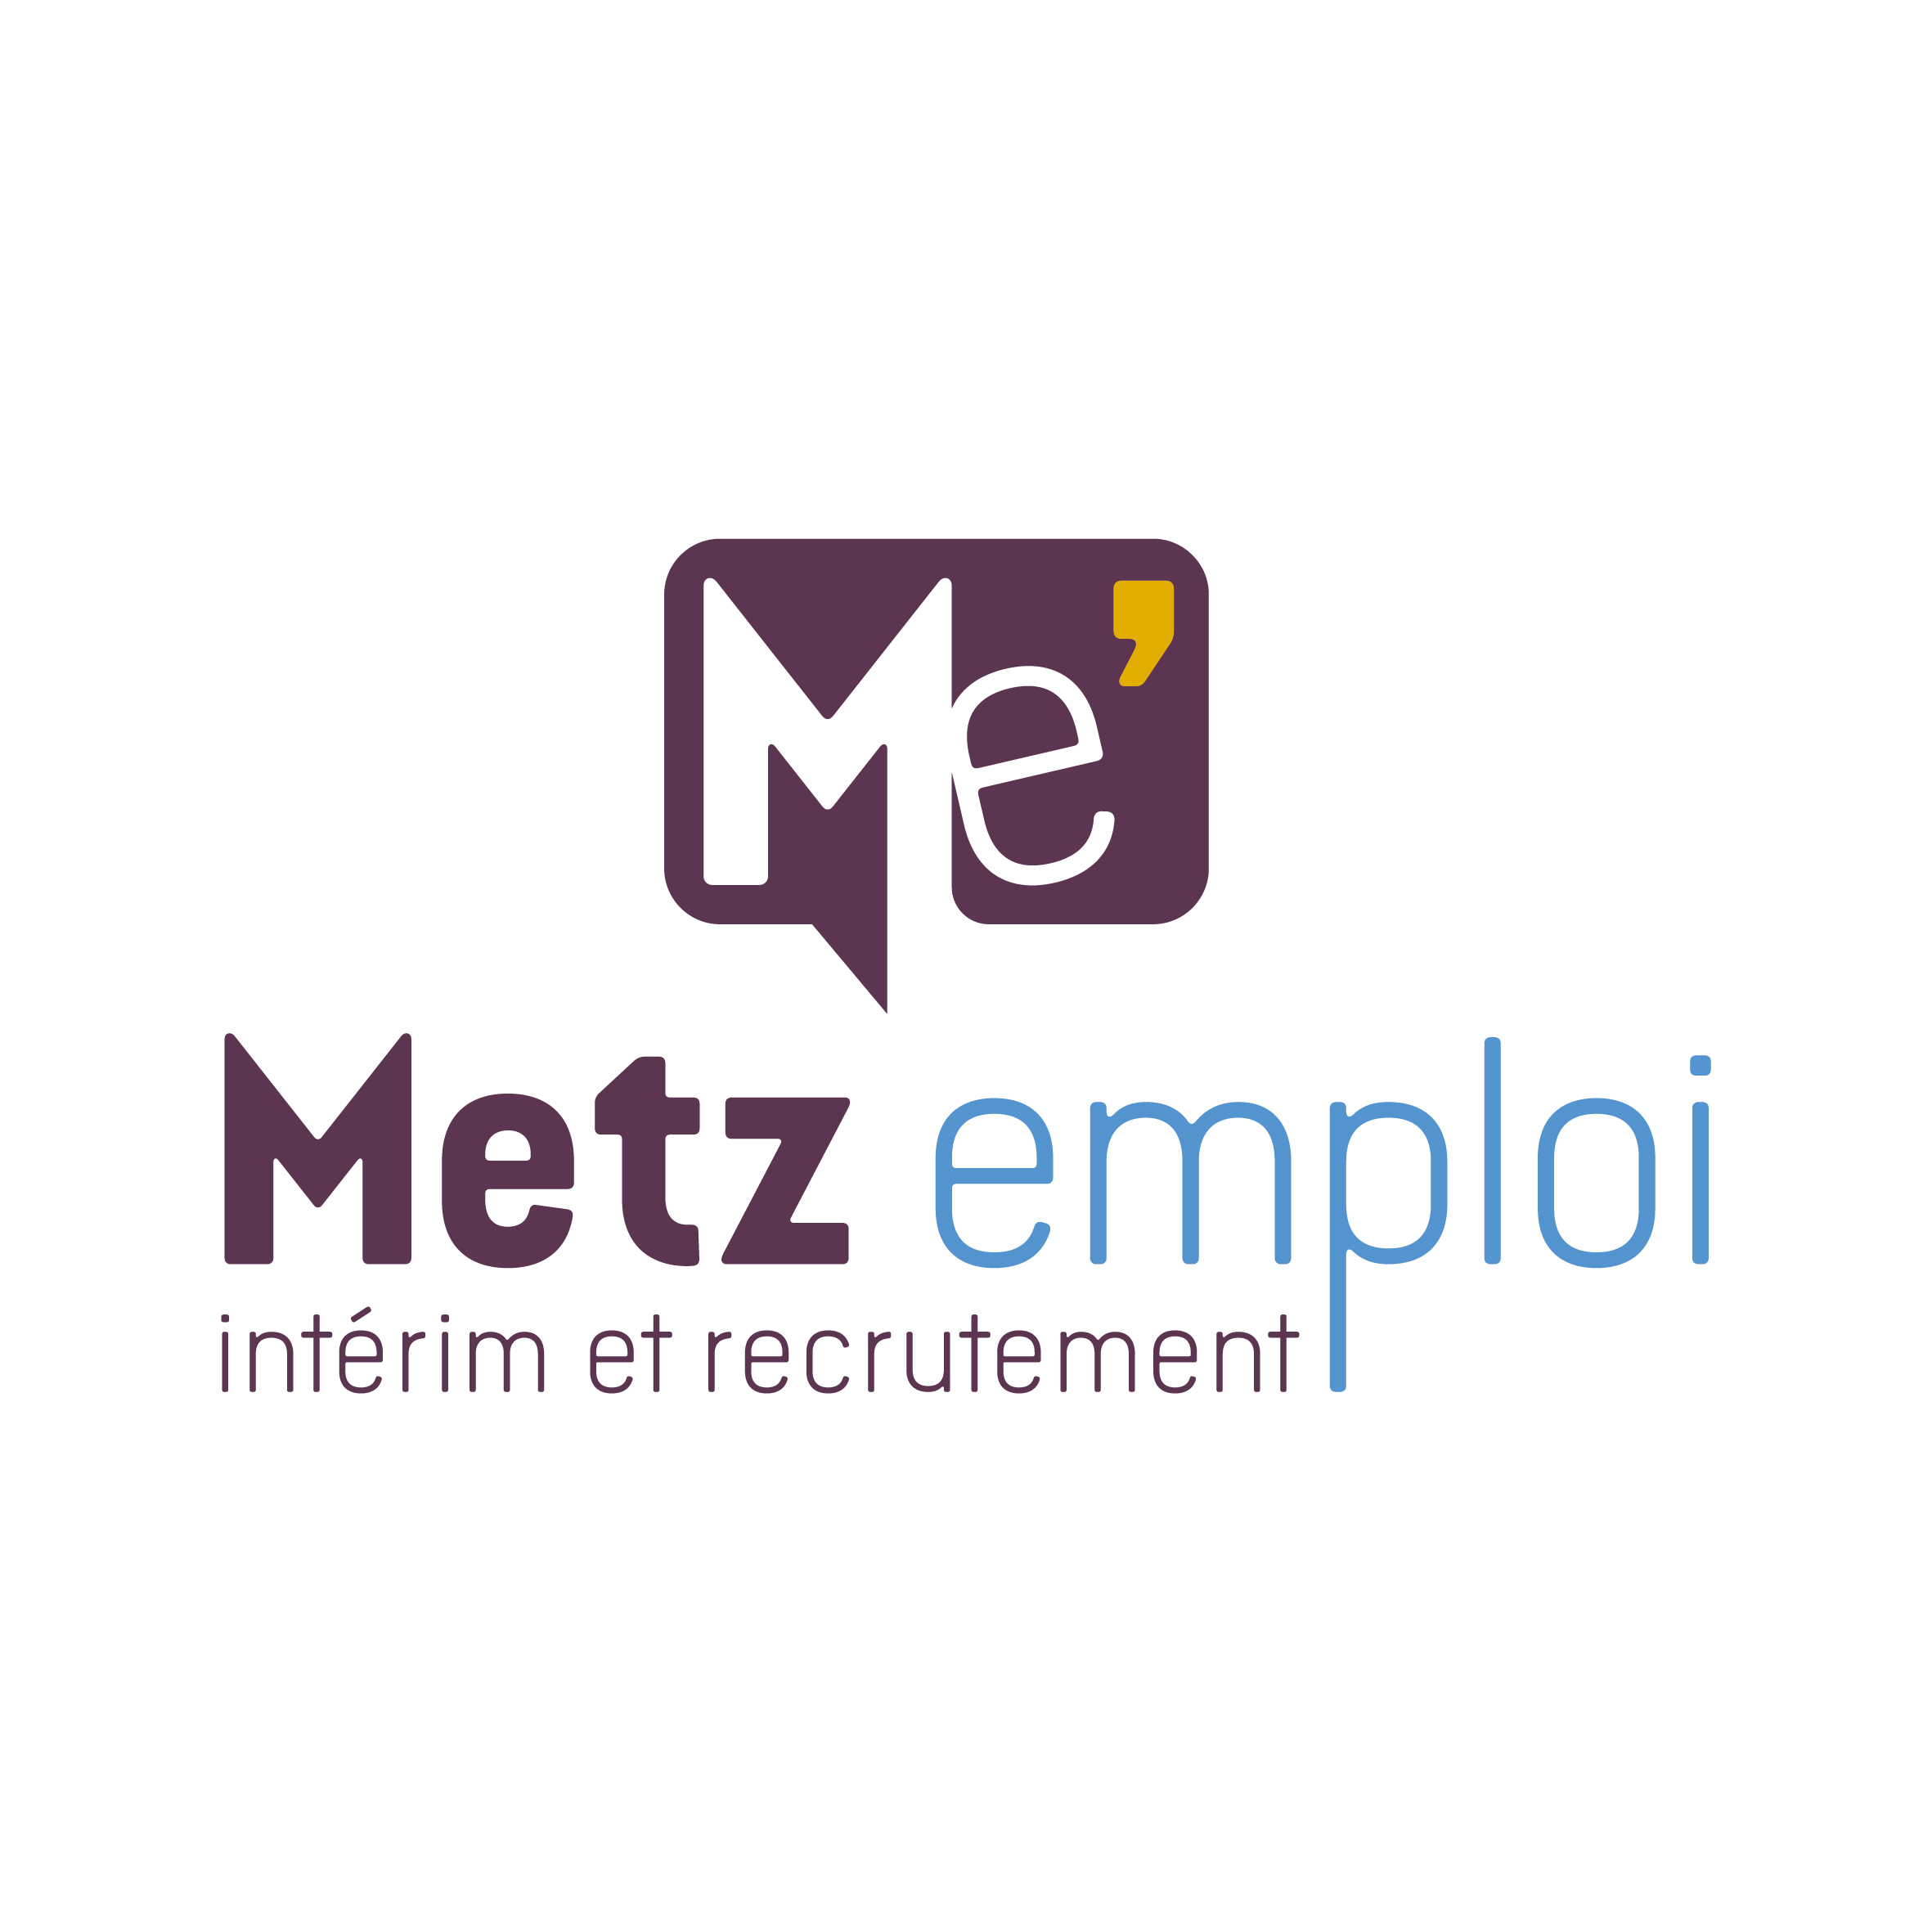 metz_emploi_groupe_jti